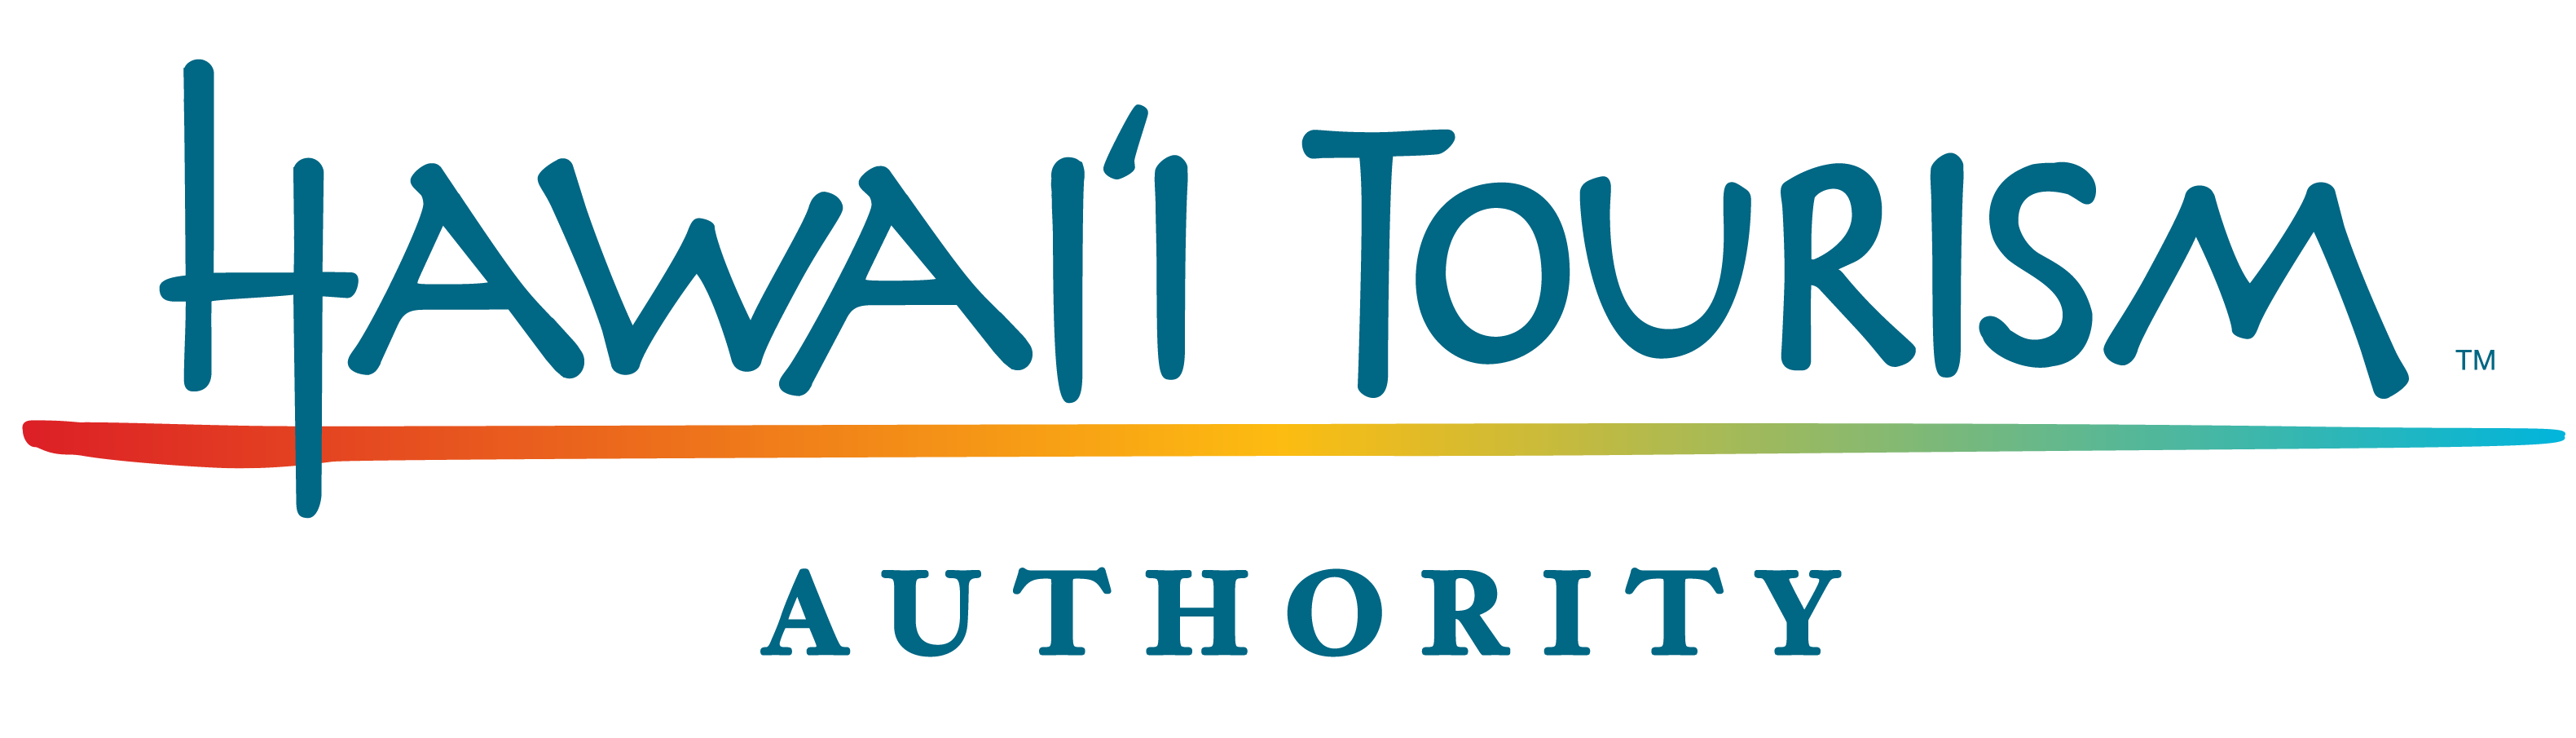 Hawaii Tourism Authority logo